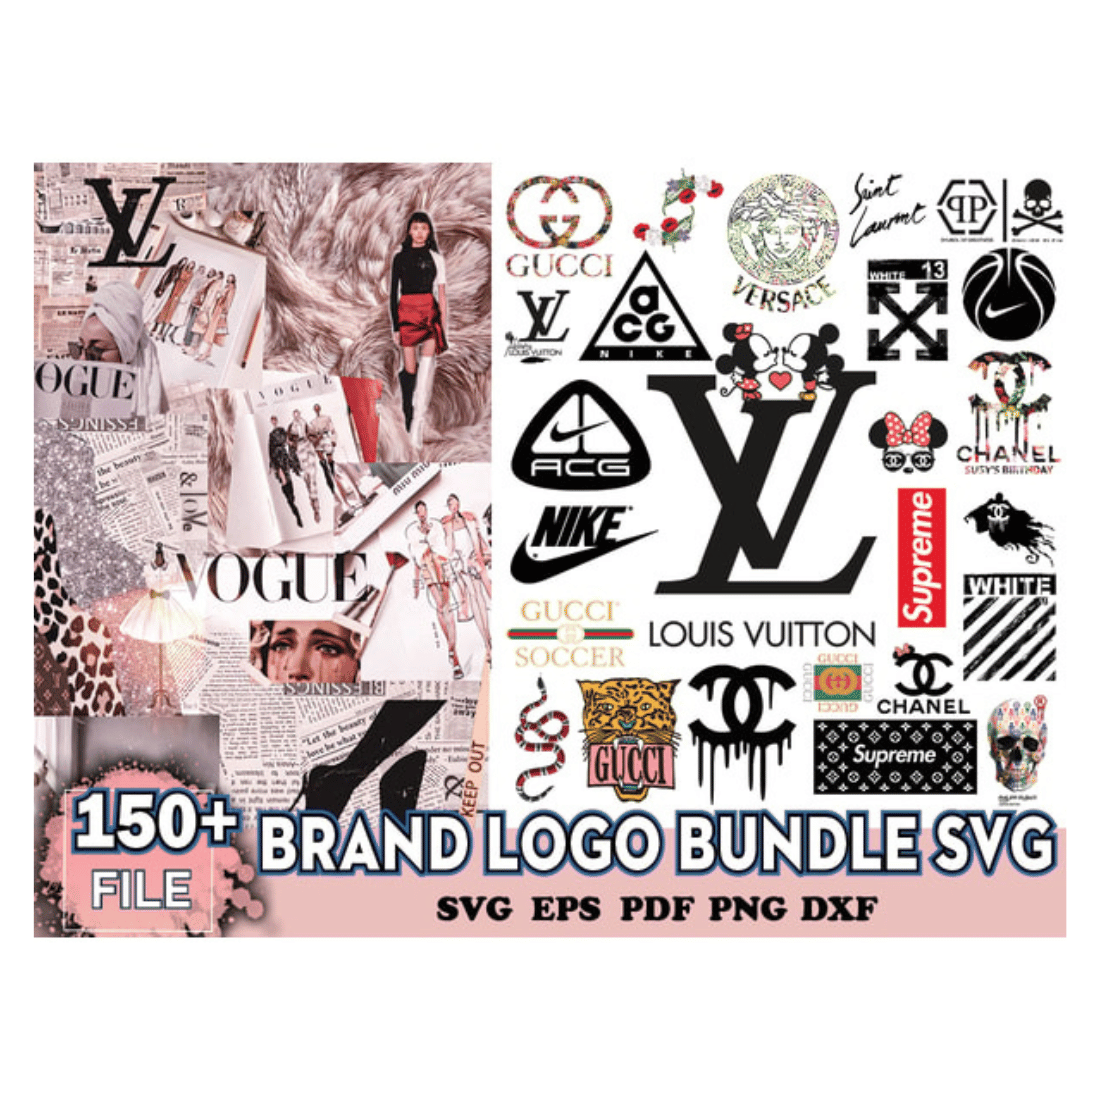 Louis Vuitton Pattern Decal / Sticker 05